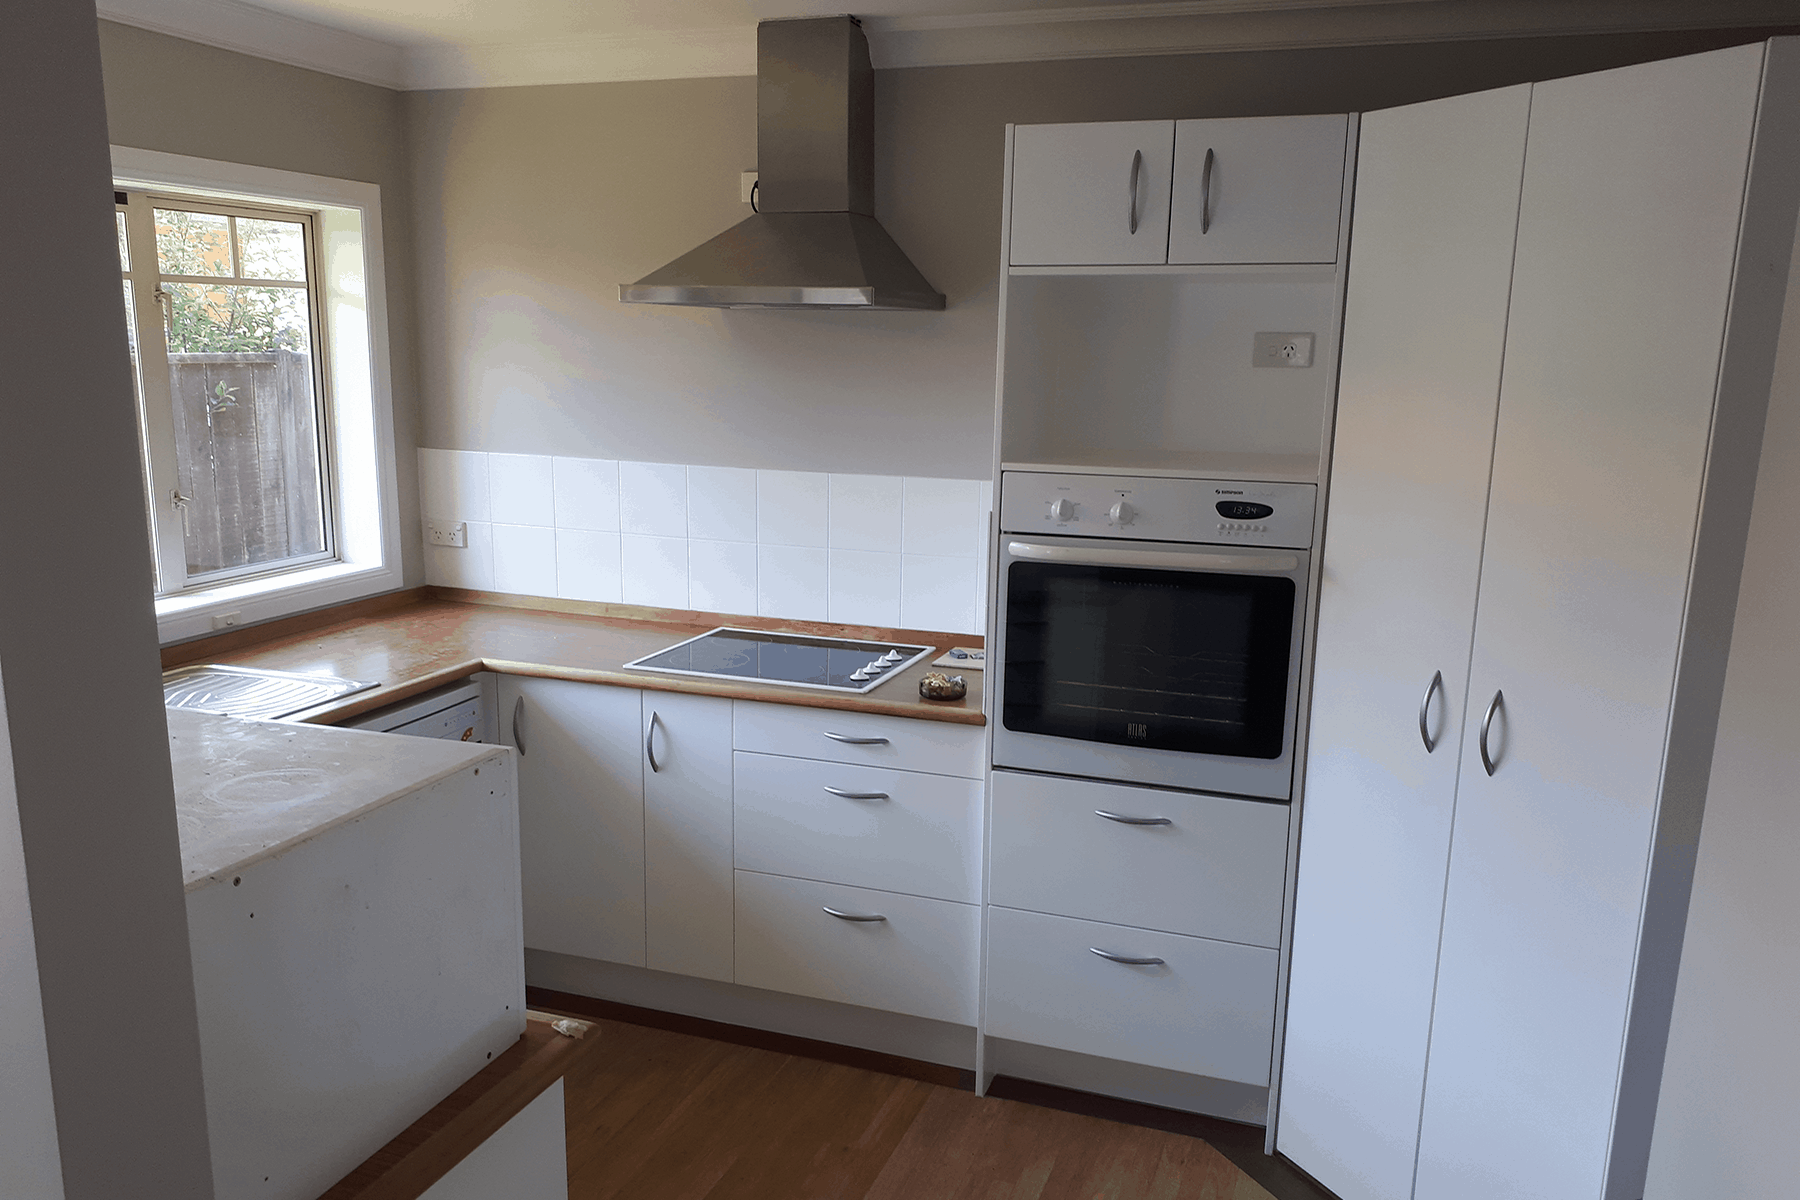 resurfaced-kitchen-wooden-bench-white-cabinets